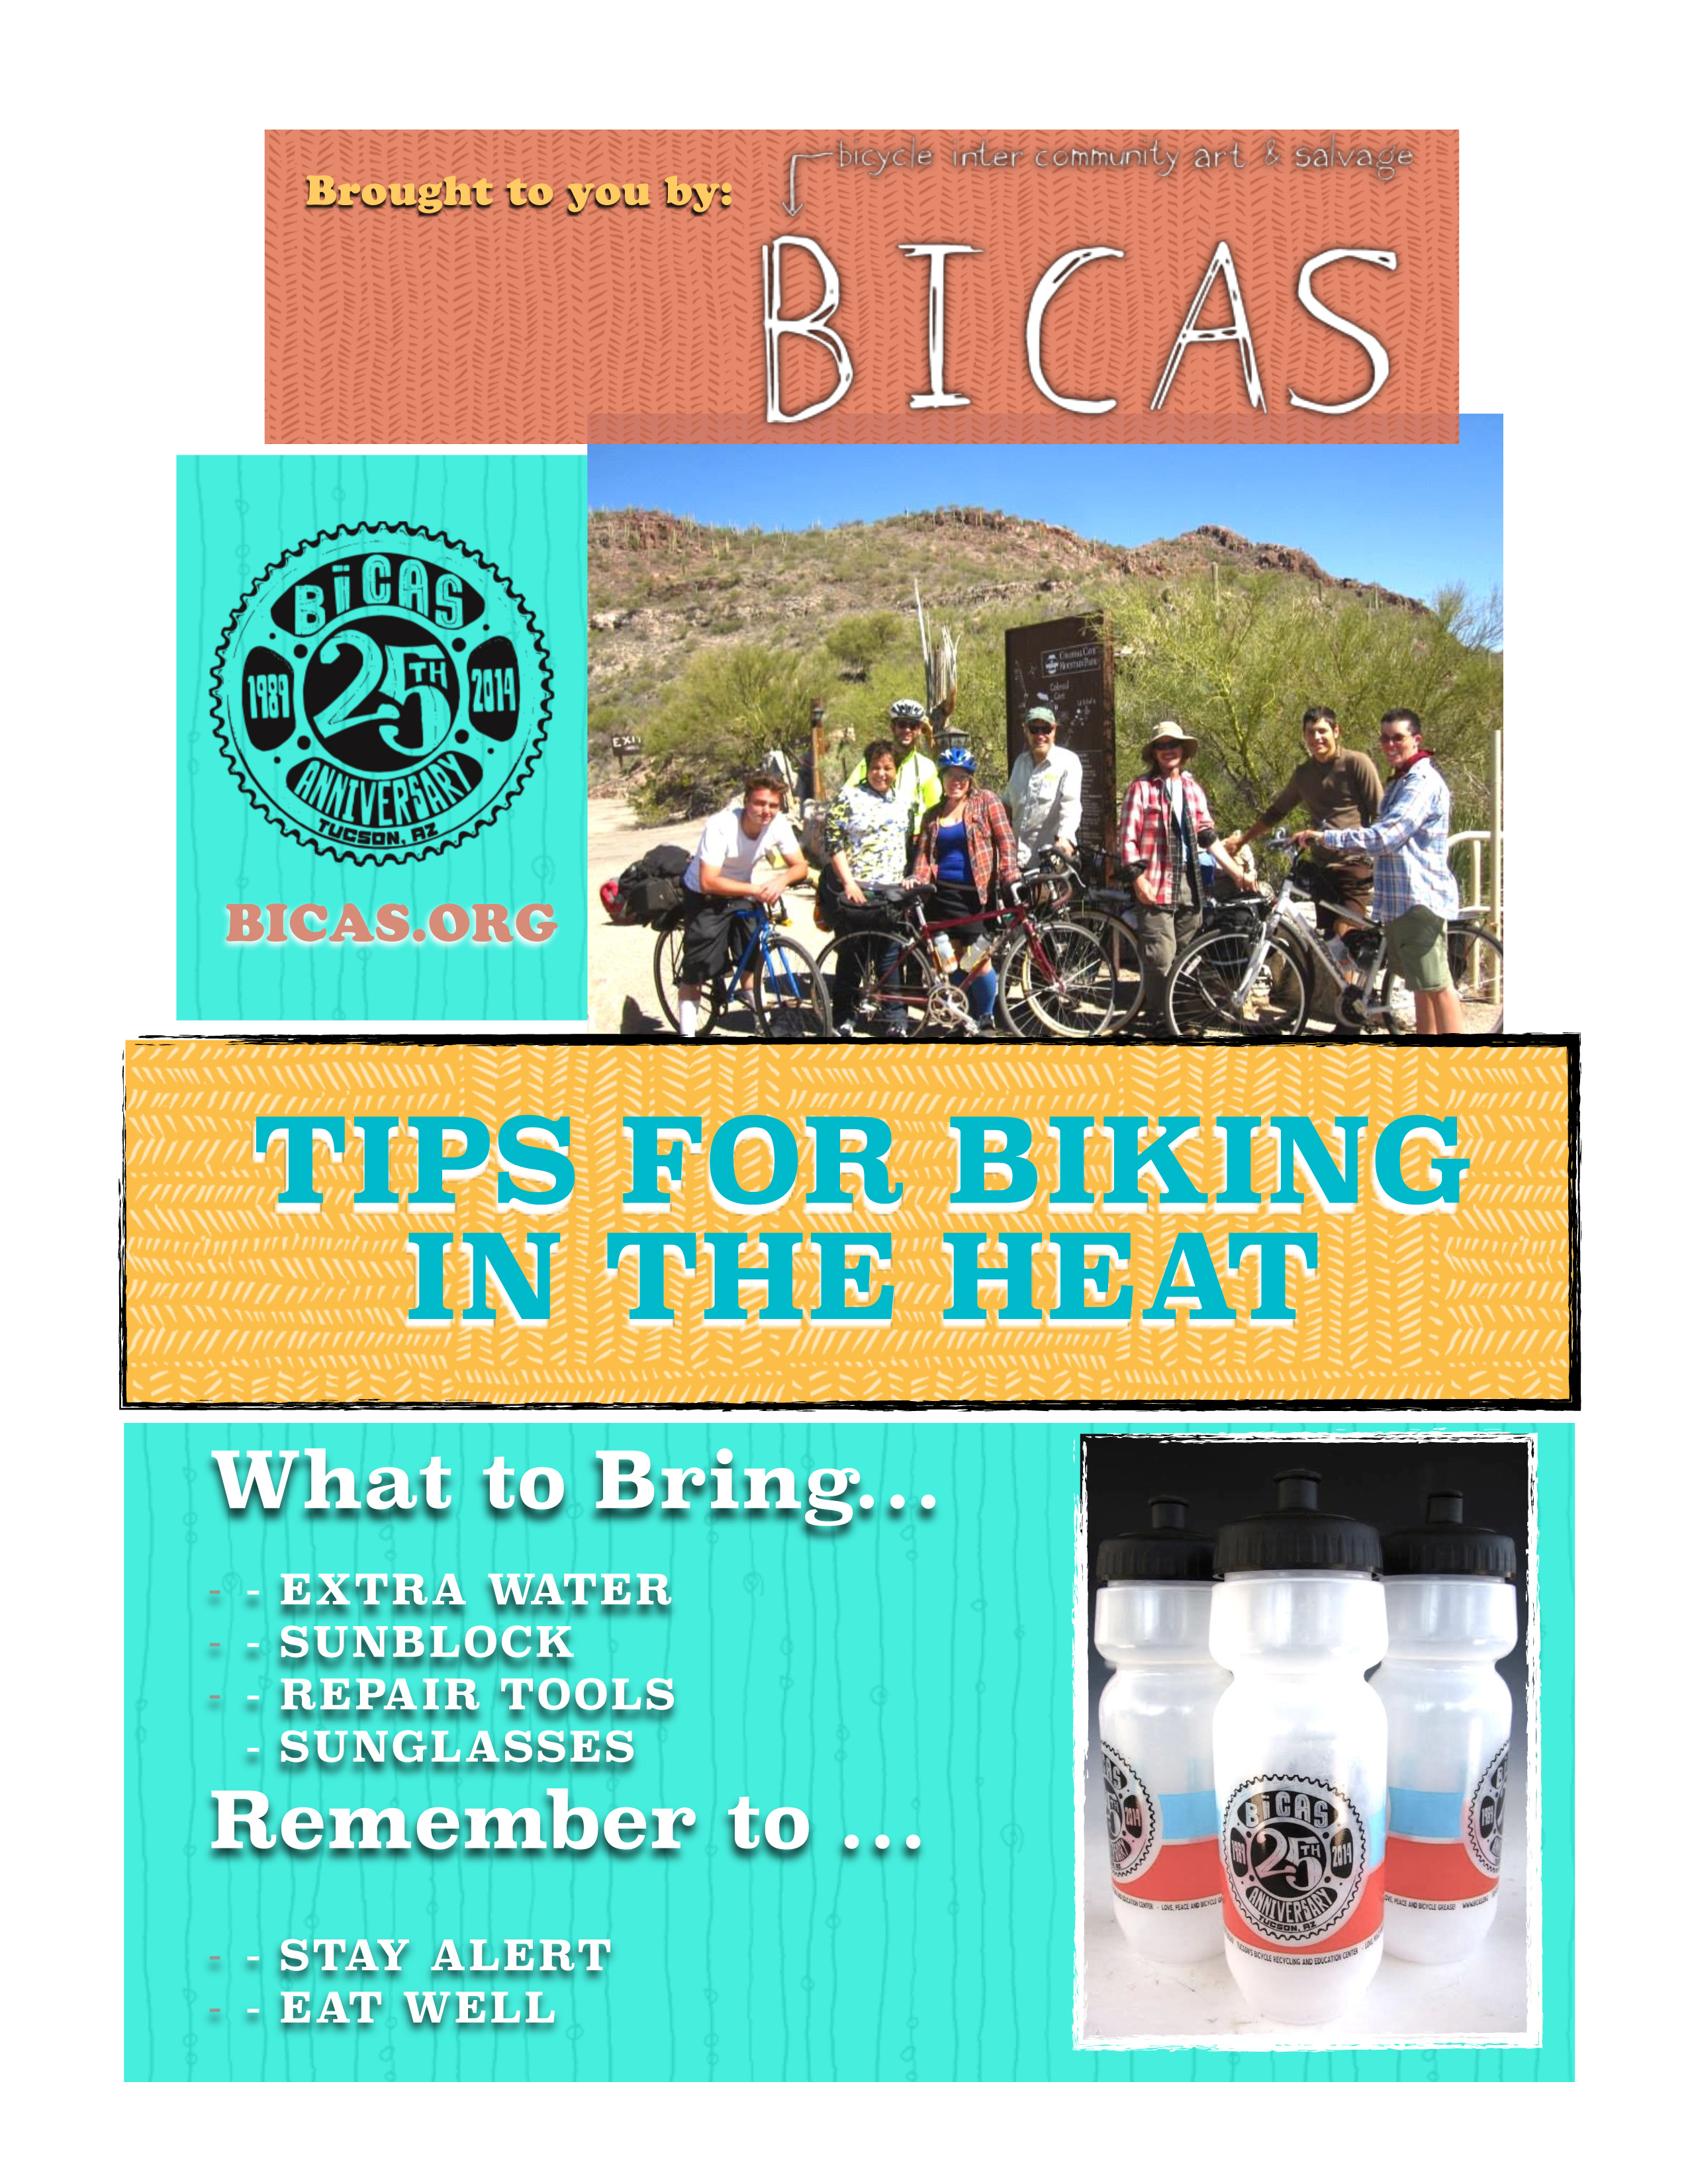 Tips for Biking in the Heat